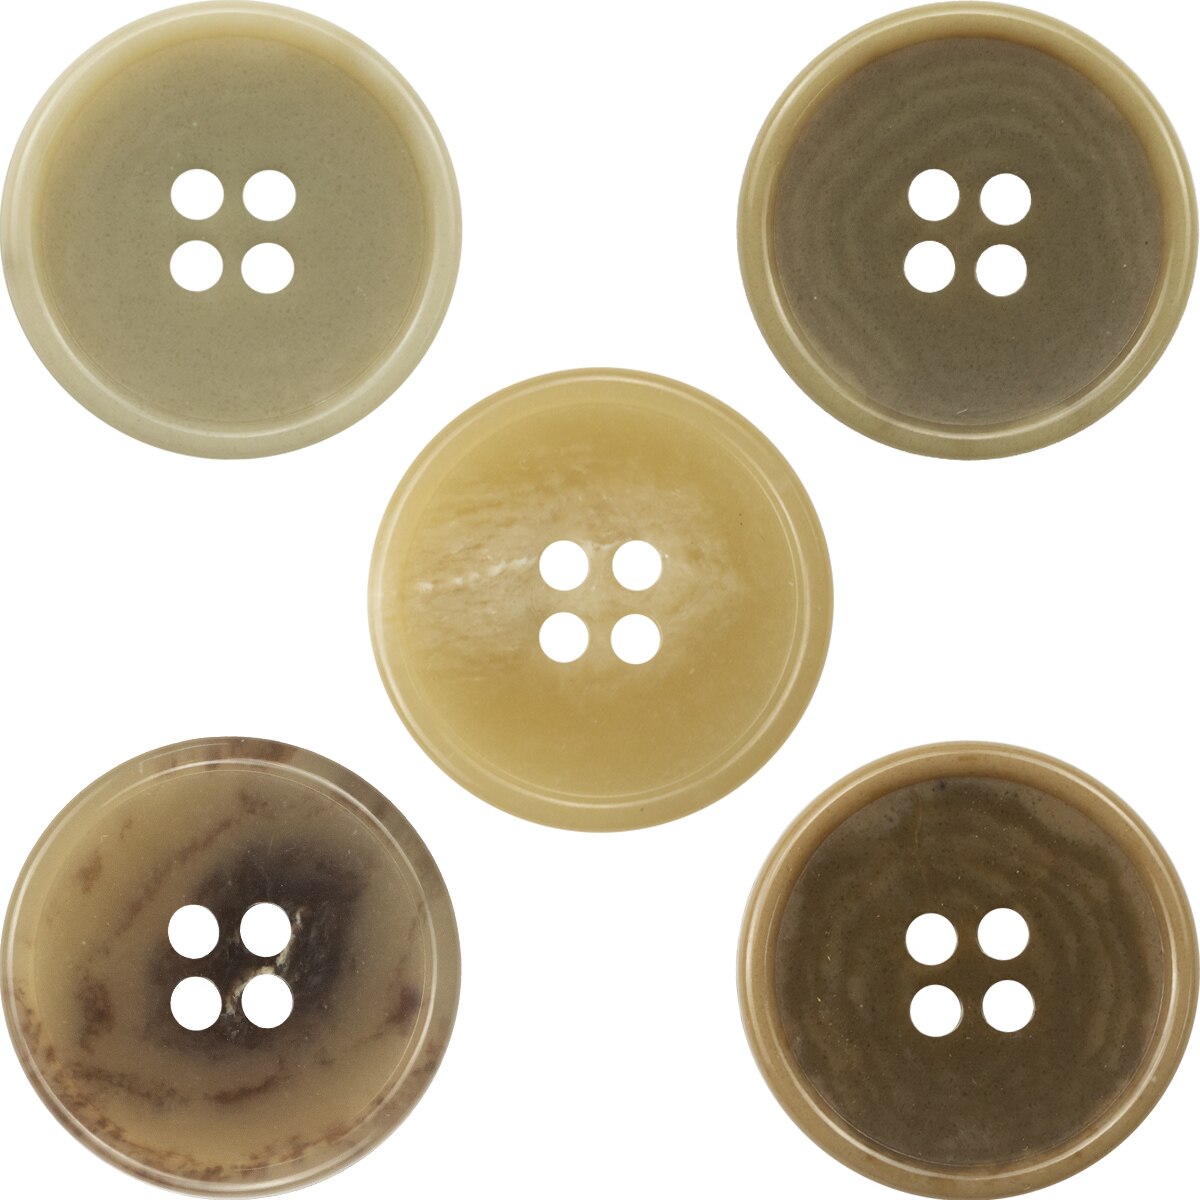 10pcs/lot Round Rim Flat Surface Solid Urea Buttons Retro Clothing Accessories